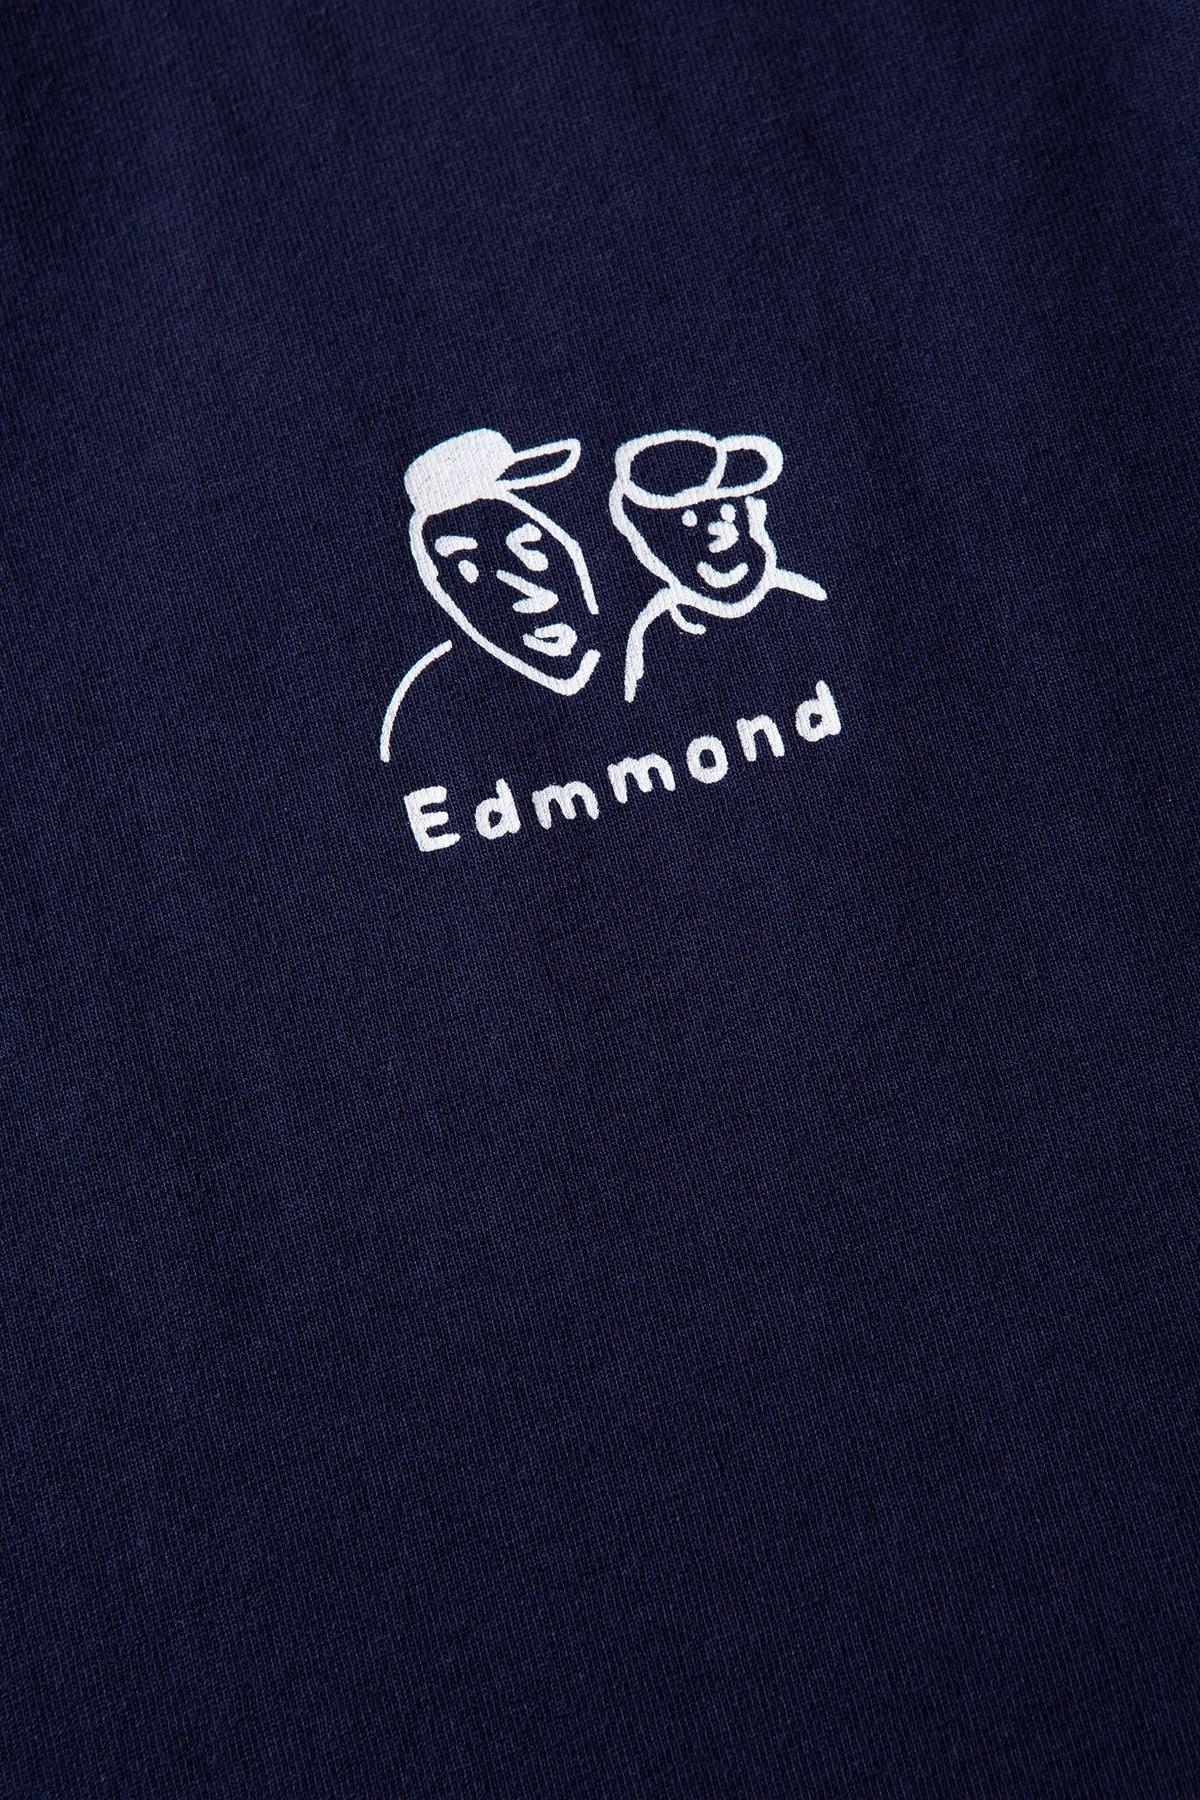 Camiseta Edmmond Studios People Navy - ECRU